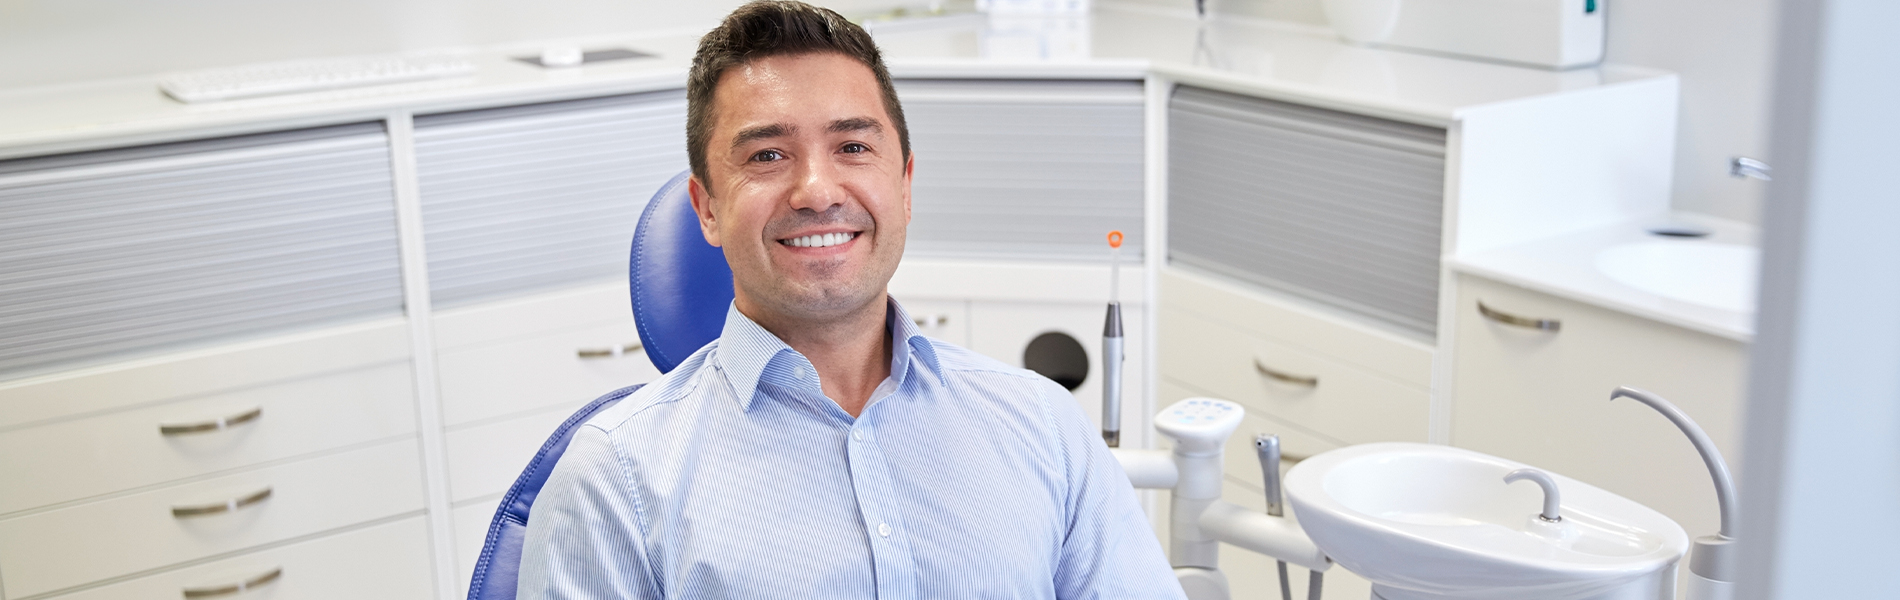 Man smiling during dental treatment